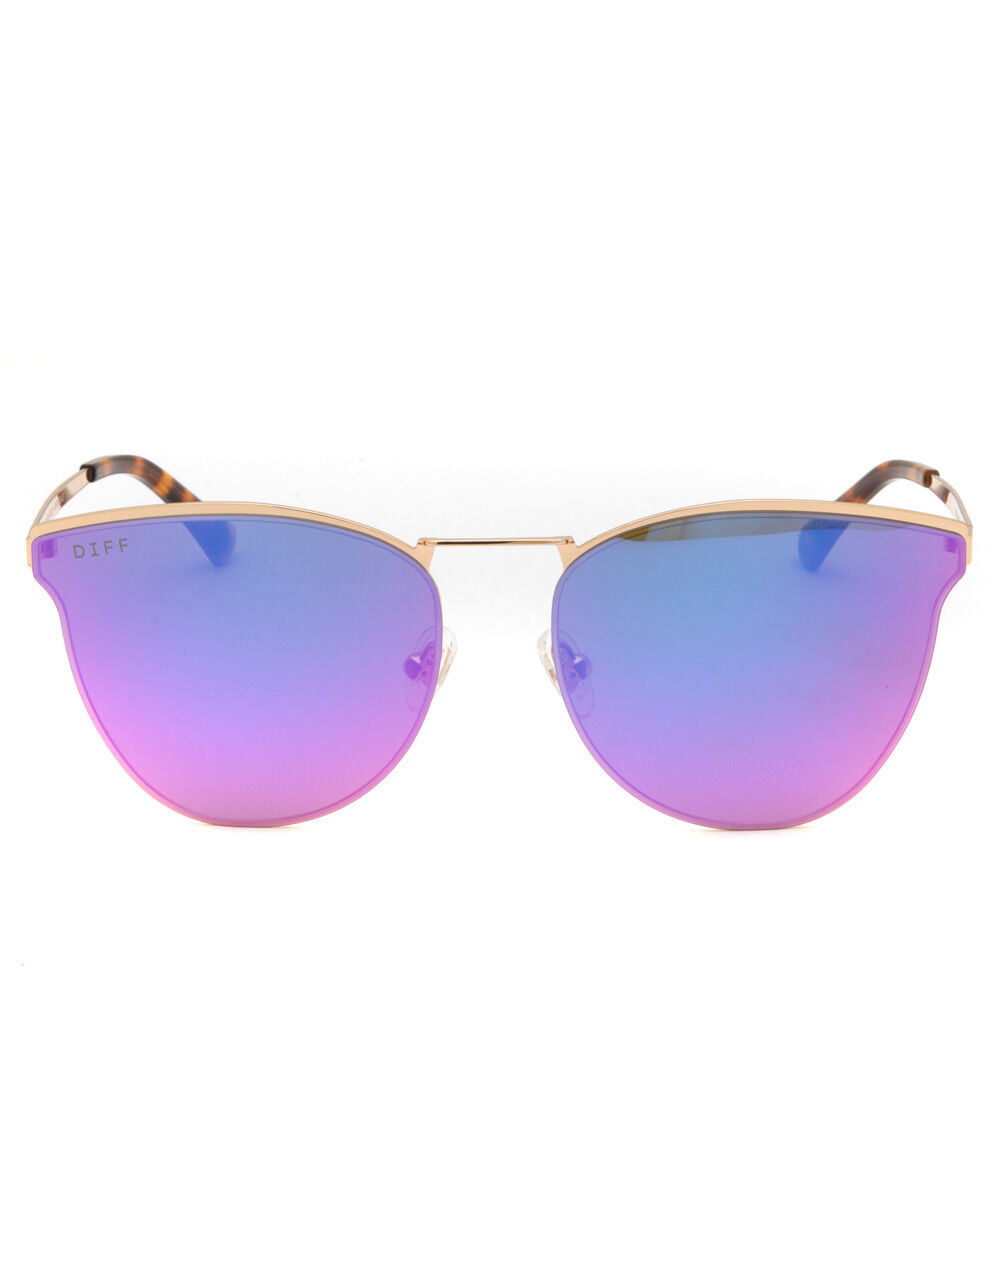 DIFF EYEWEAR Sadie Gold & Purple Mirror Sunglasses image number 1